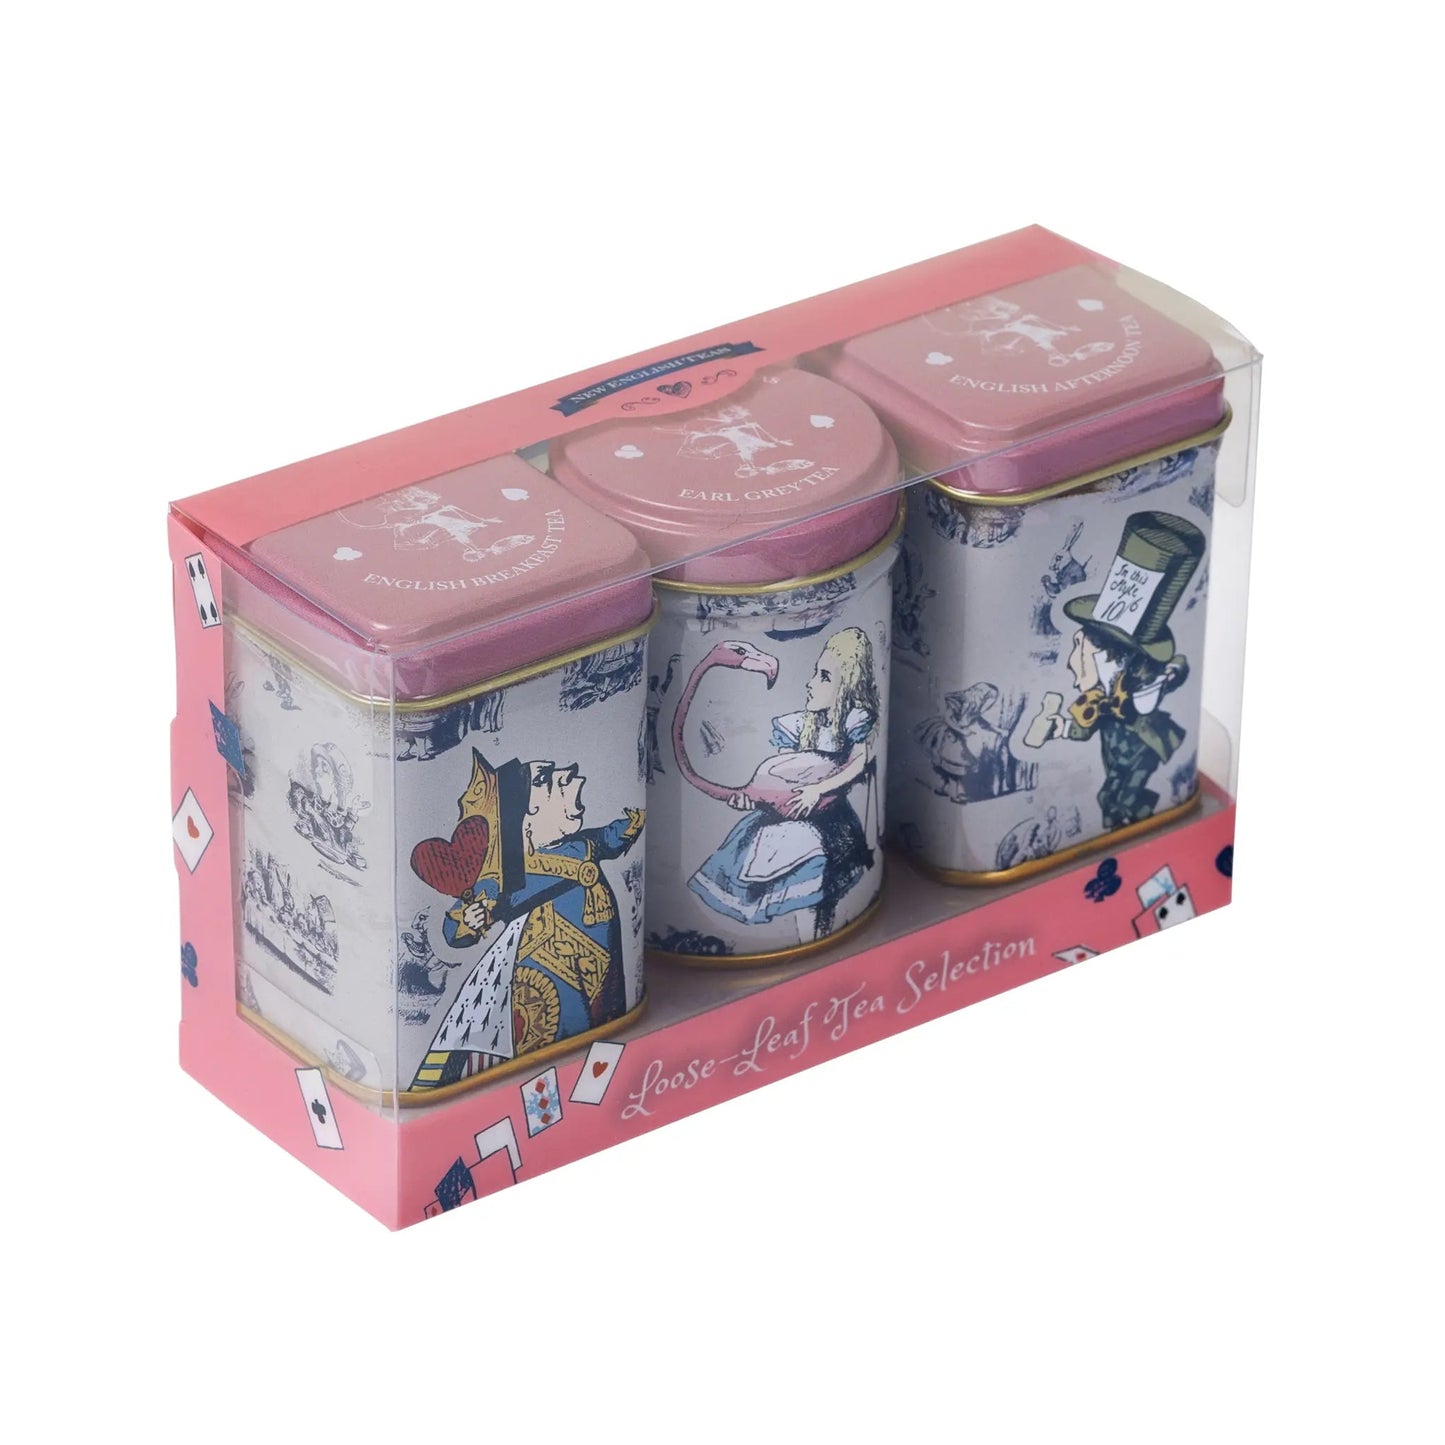 Alice in Wonderland Pink Flamingo Mini Tin Gift Set Gift Packs New English Teas 